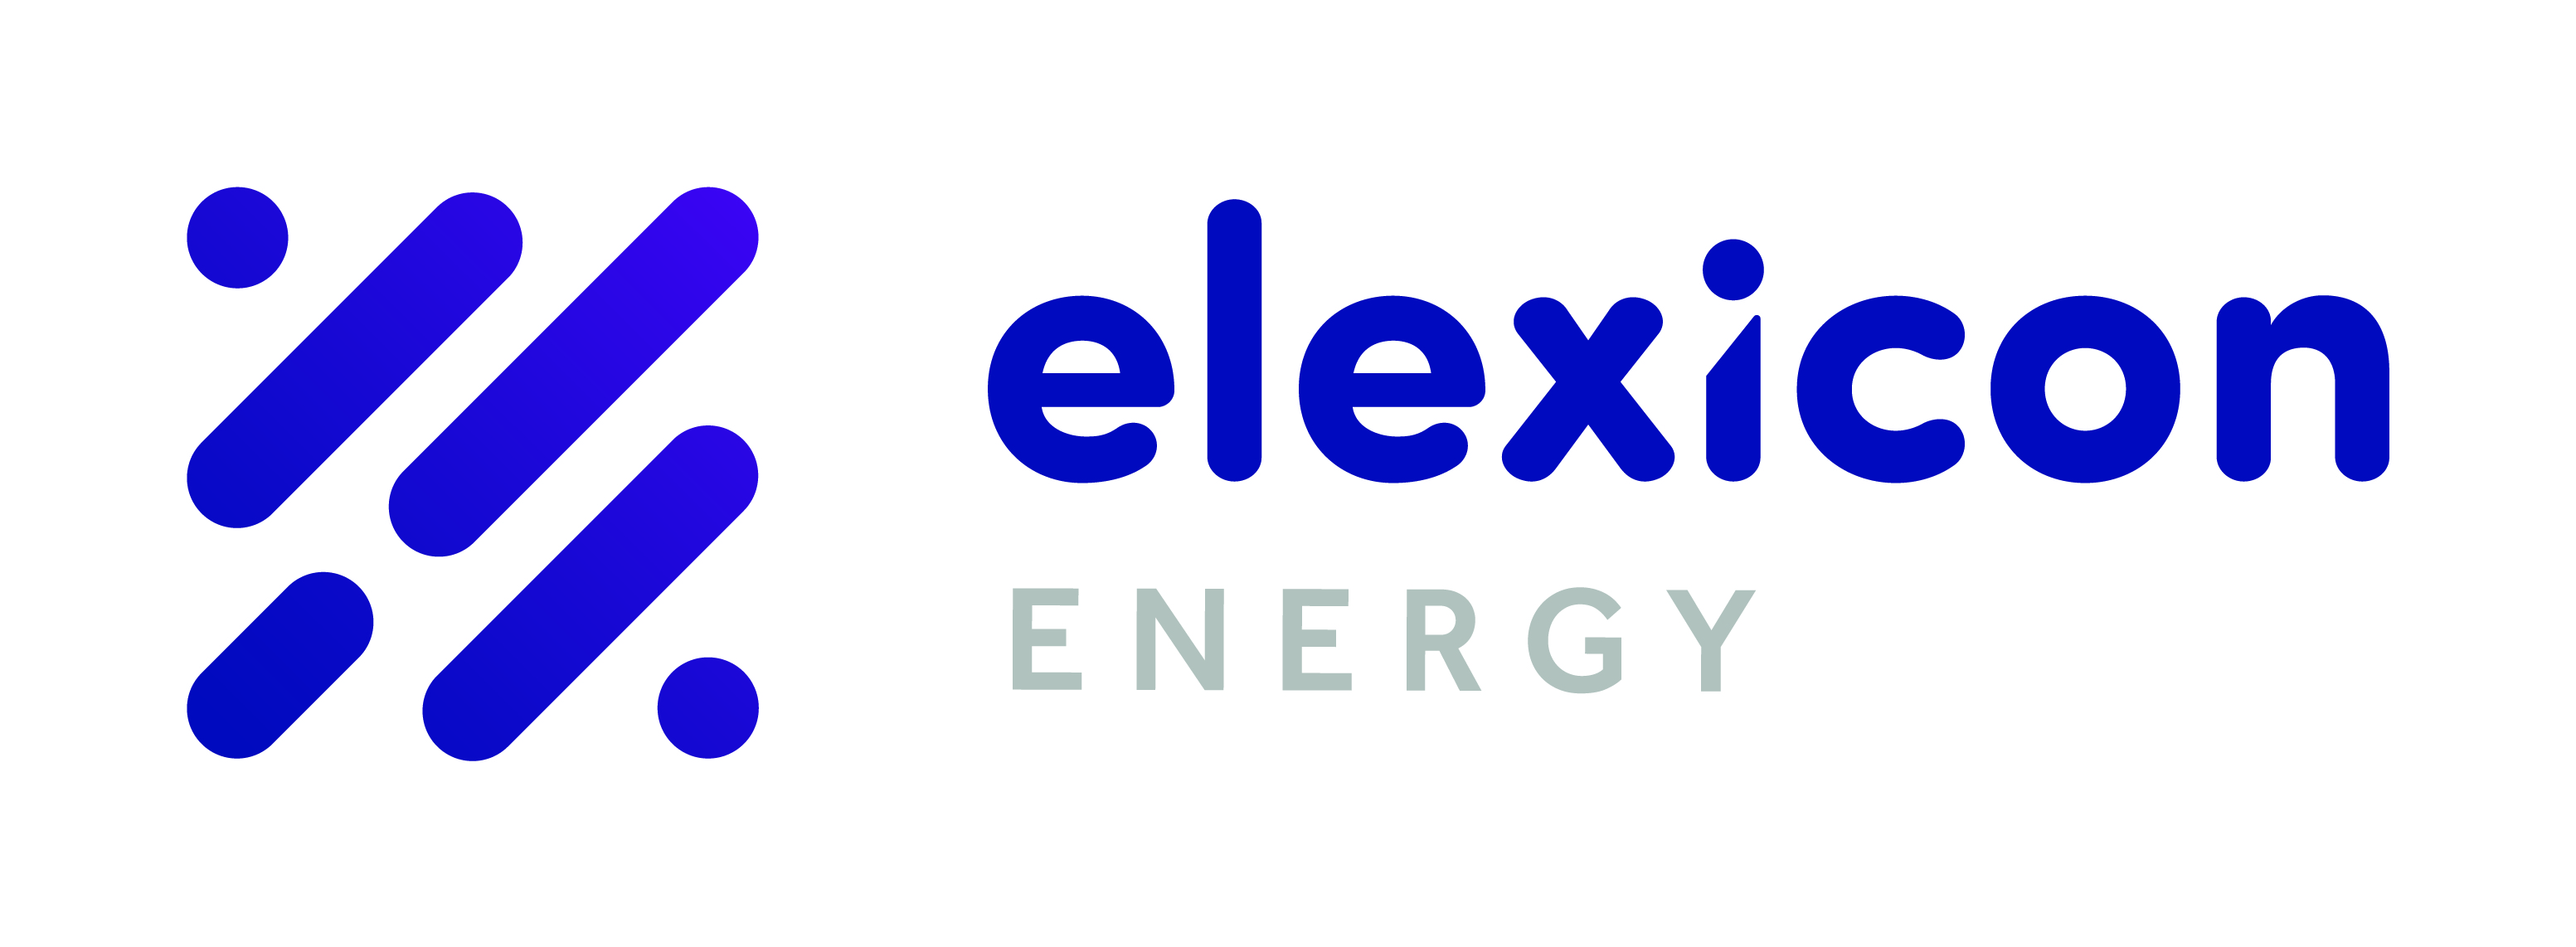 Elexicon Energy Logo